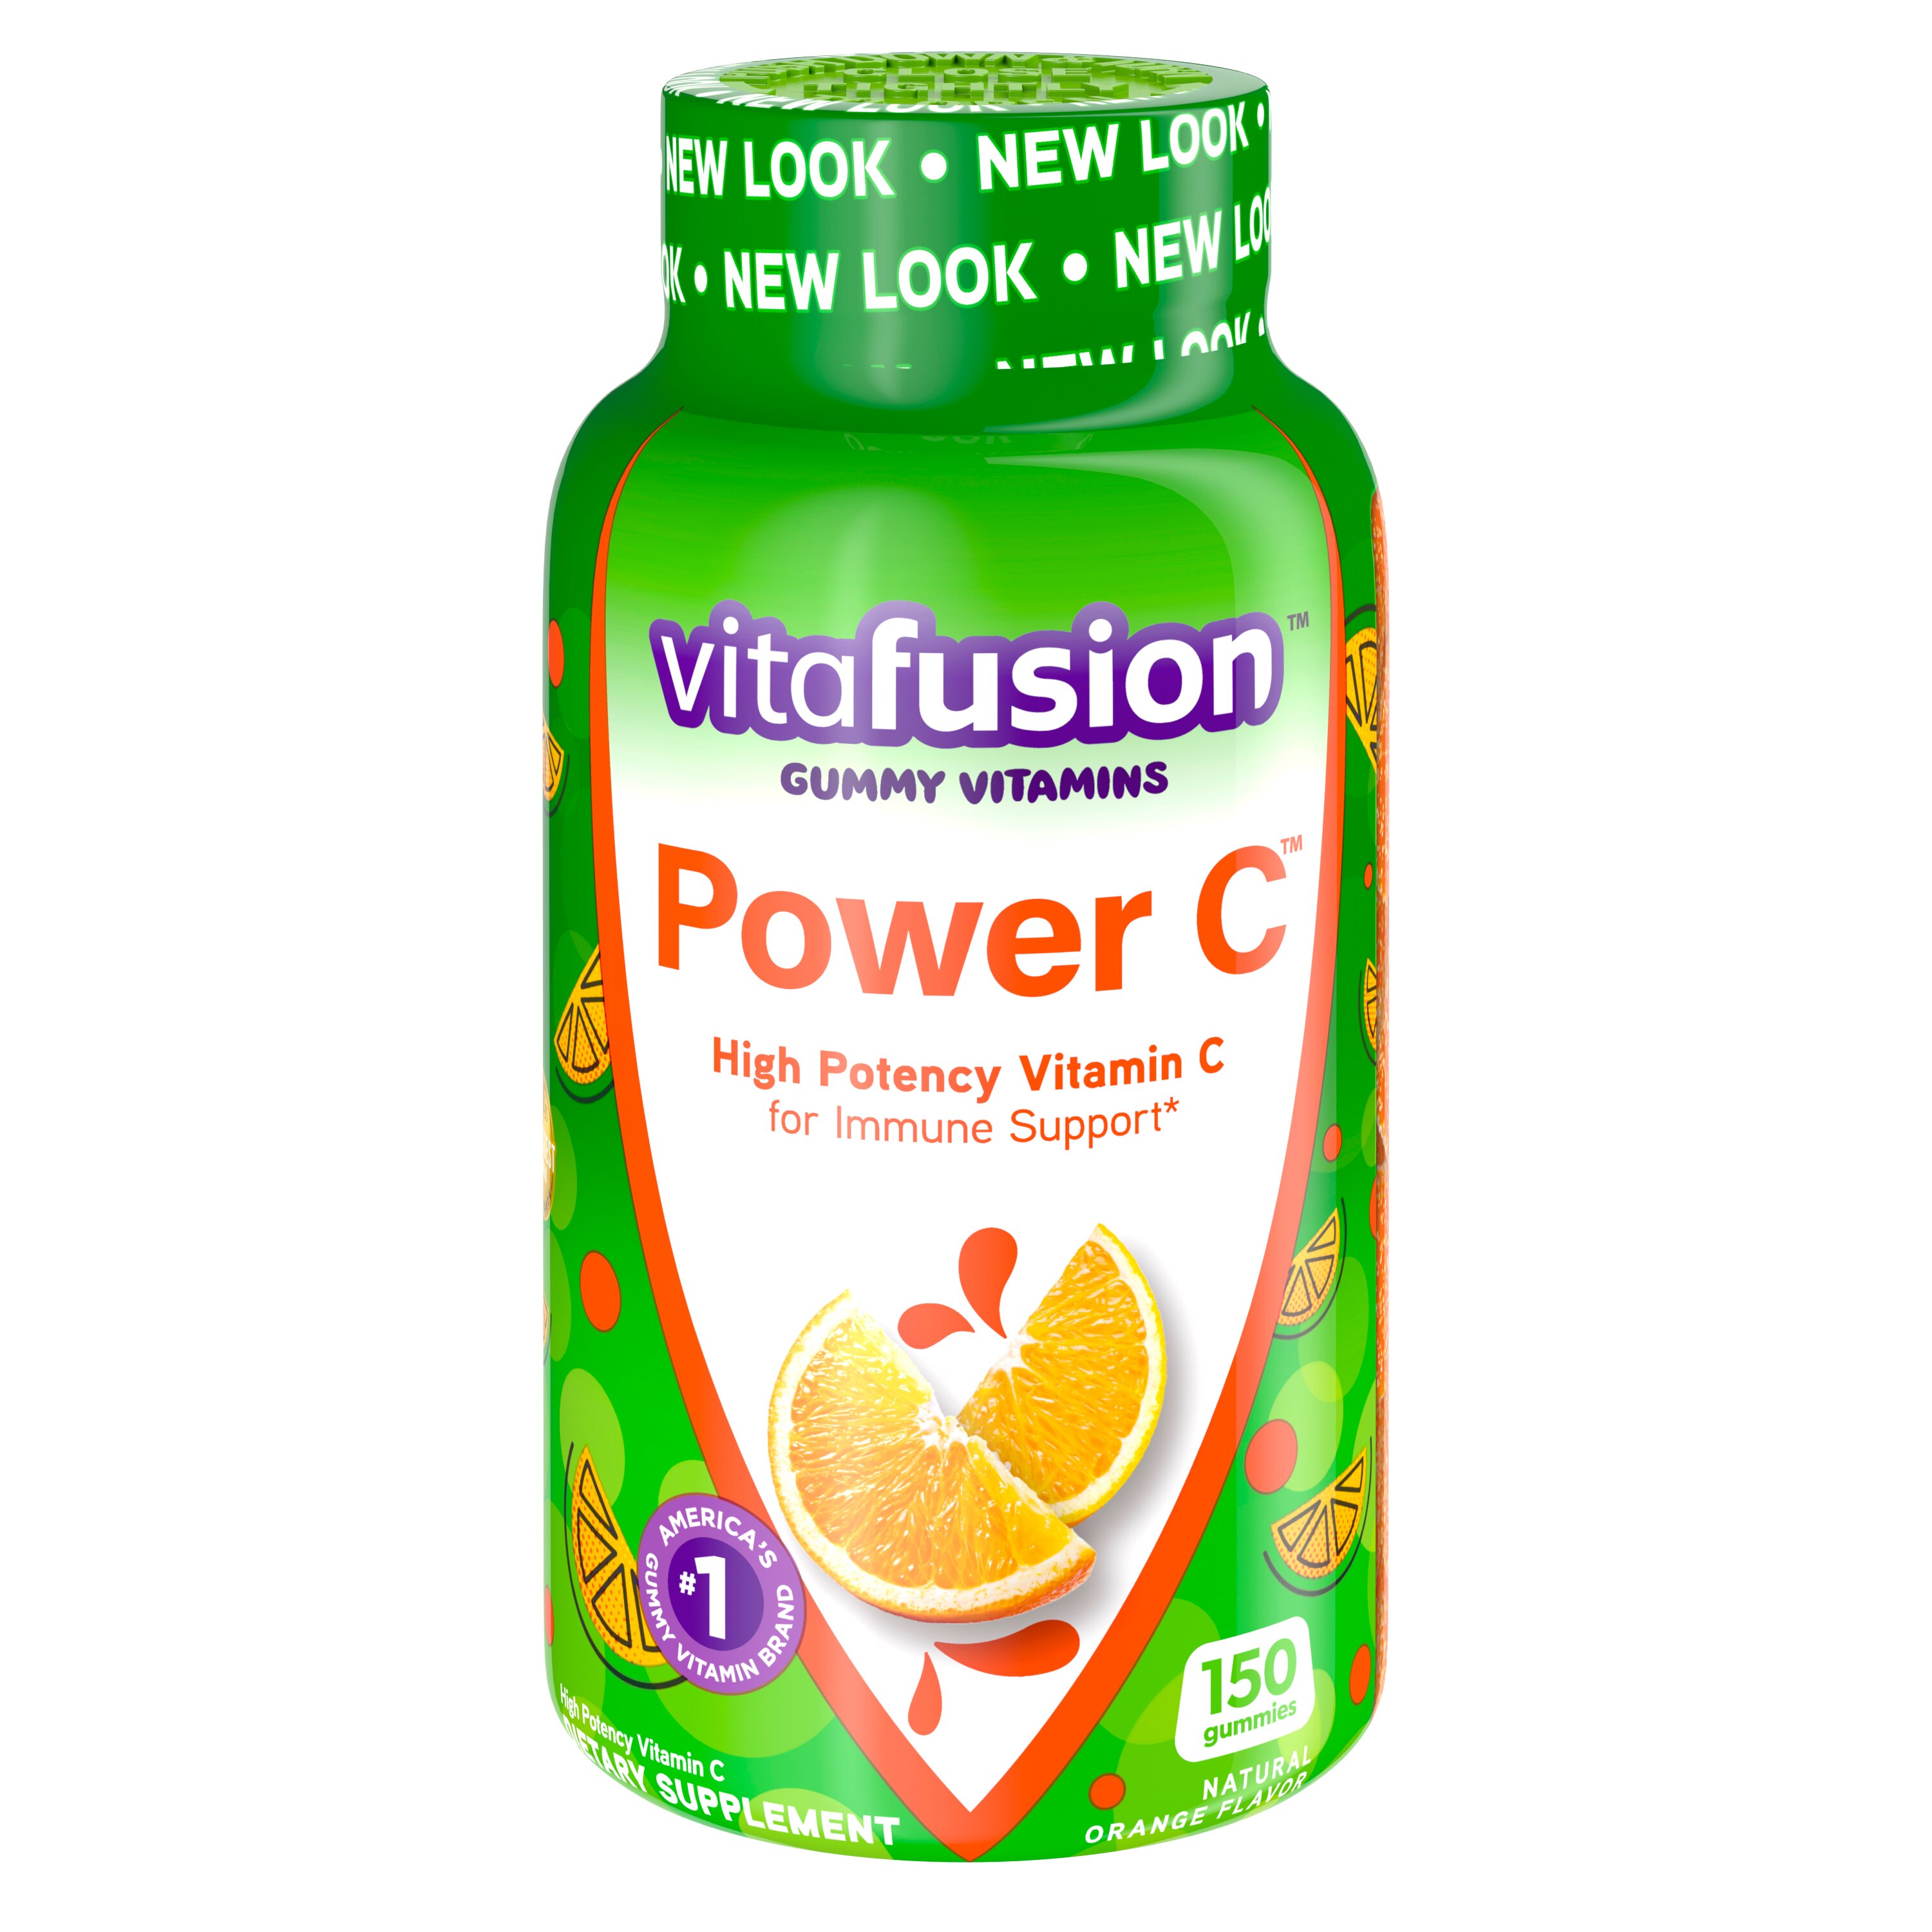 Vitafusion Power C Immune Support Gummy Vitamins